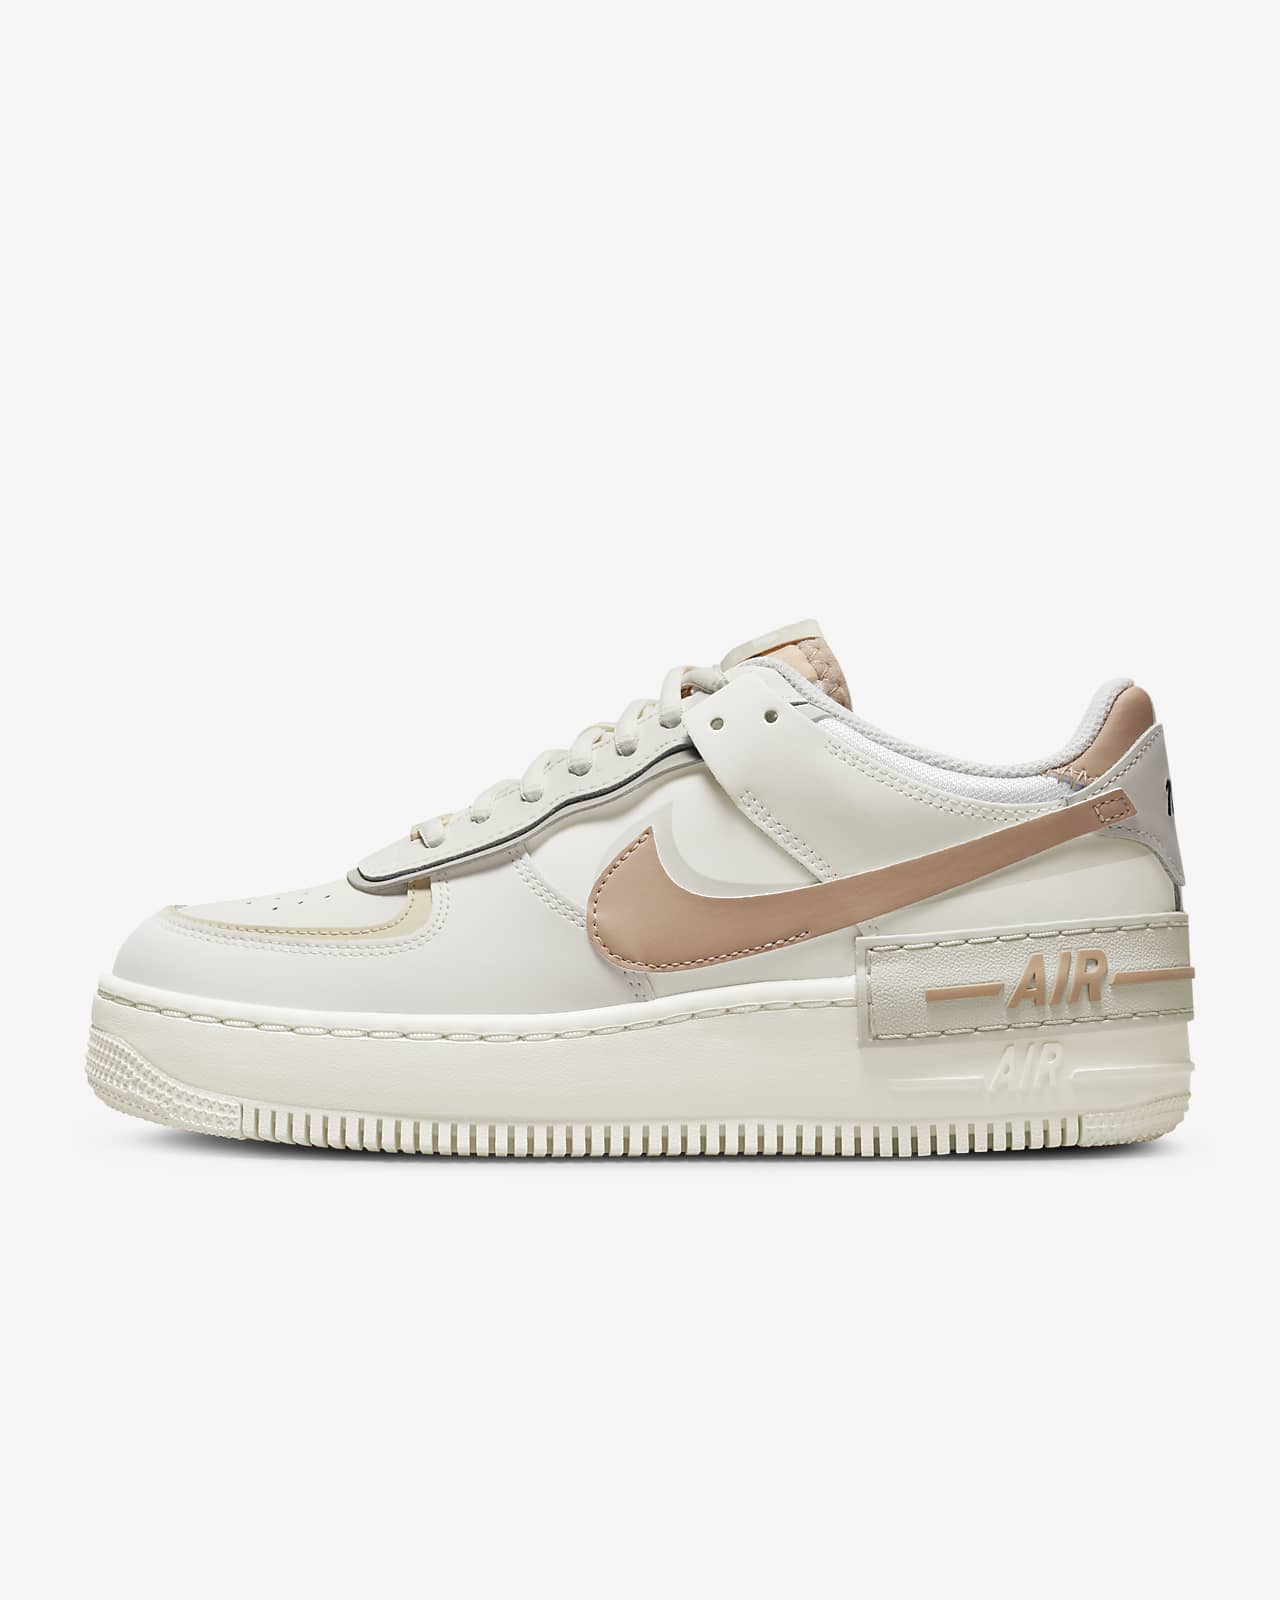 Air Force 1 Shoes. Nike LU